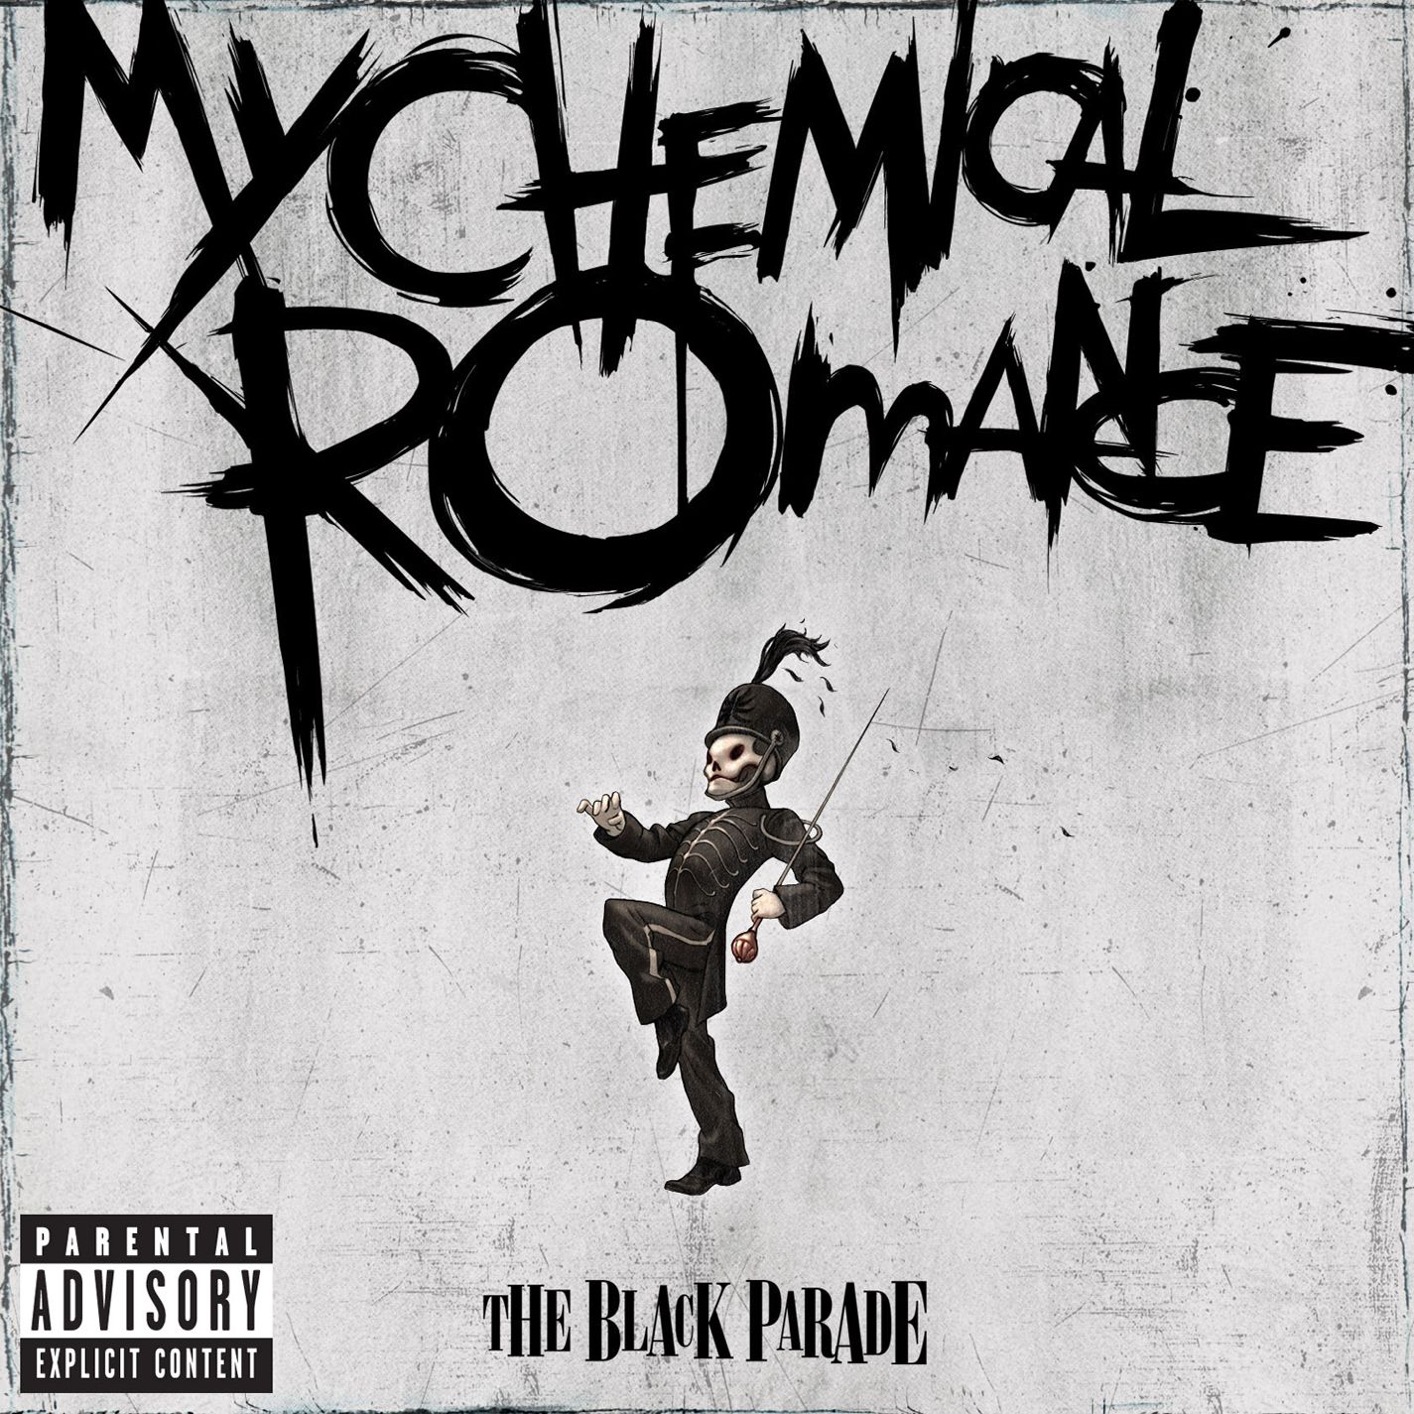 The Black Parade (Remastered). Album of My Chemical Romance buy or stream. | HIGHRESAUDIO